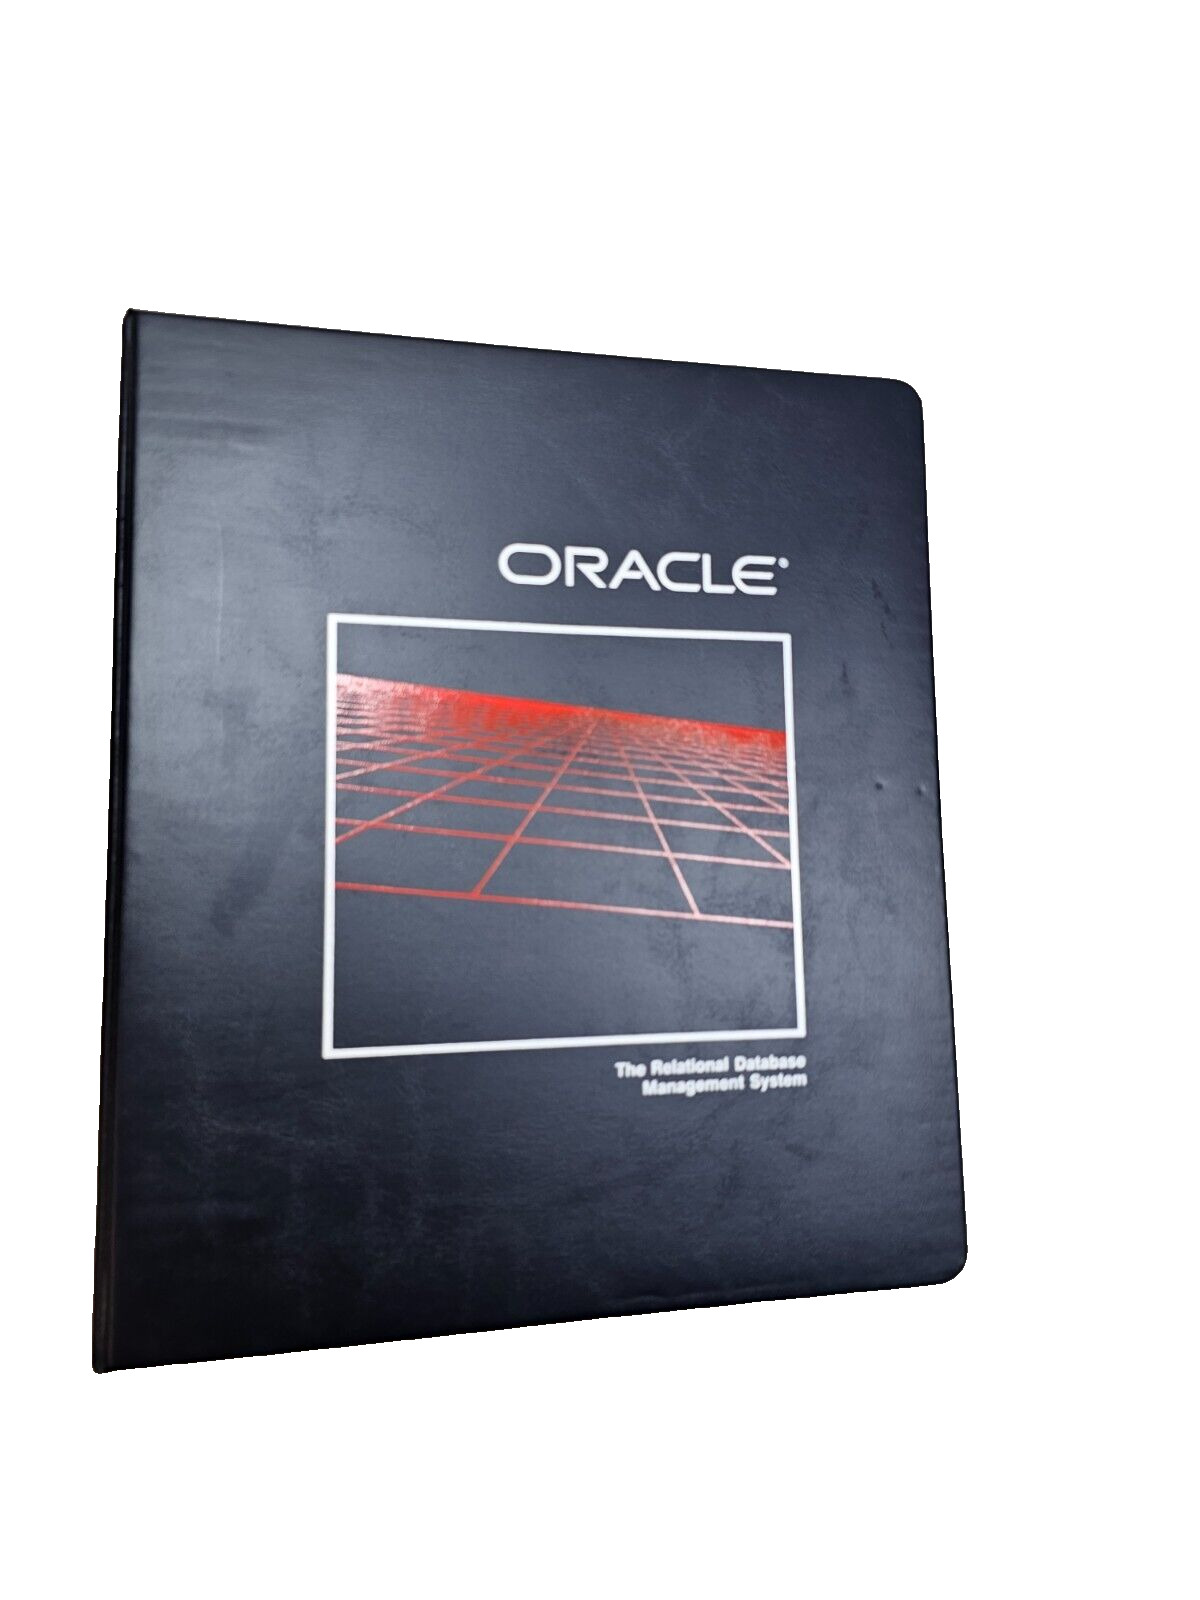 Vintage Early 80's Oracle Software 3 Ring Binder Relational Database Management